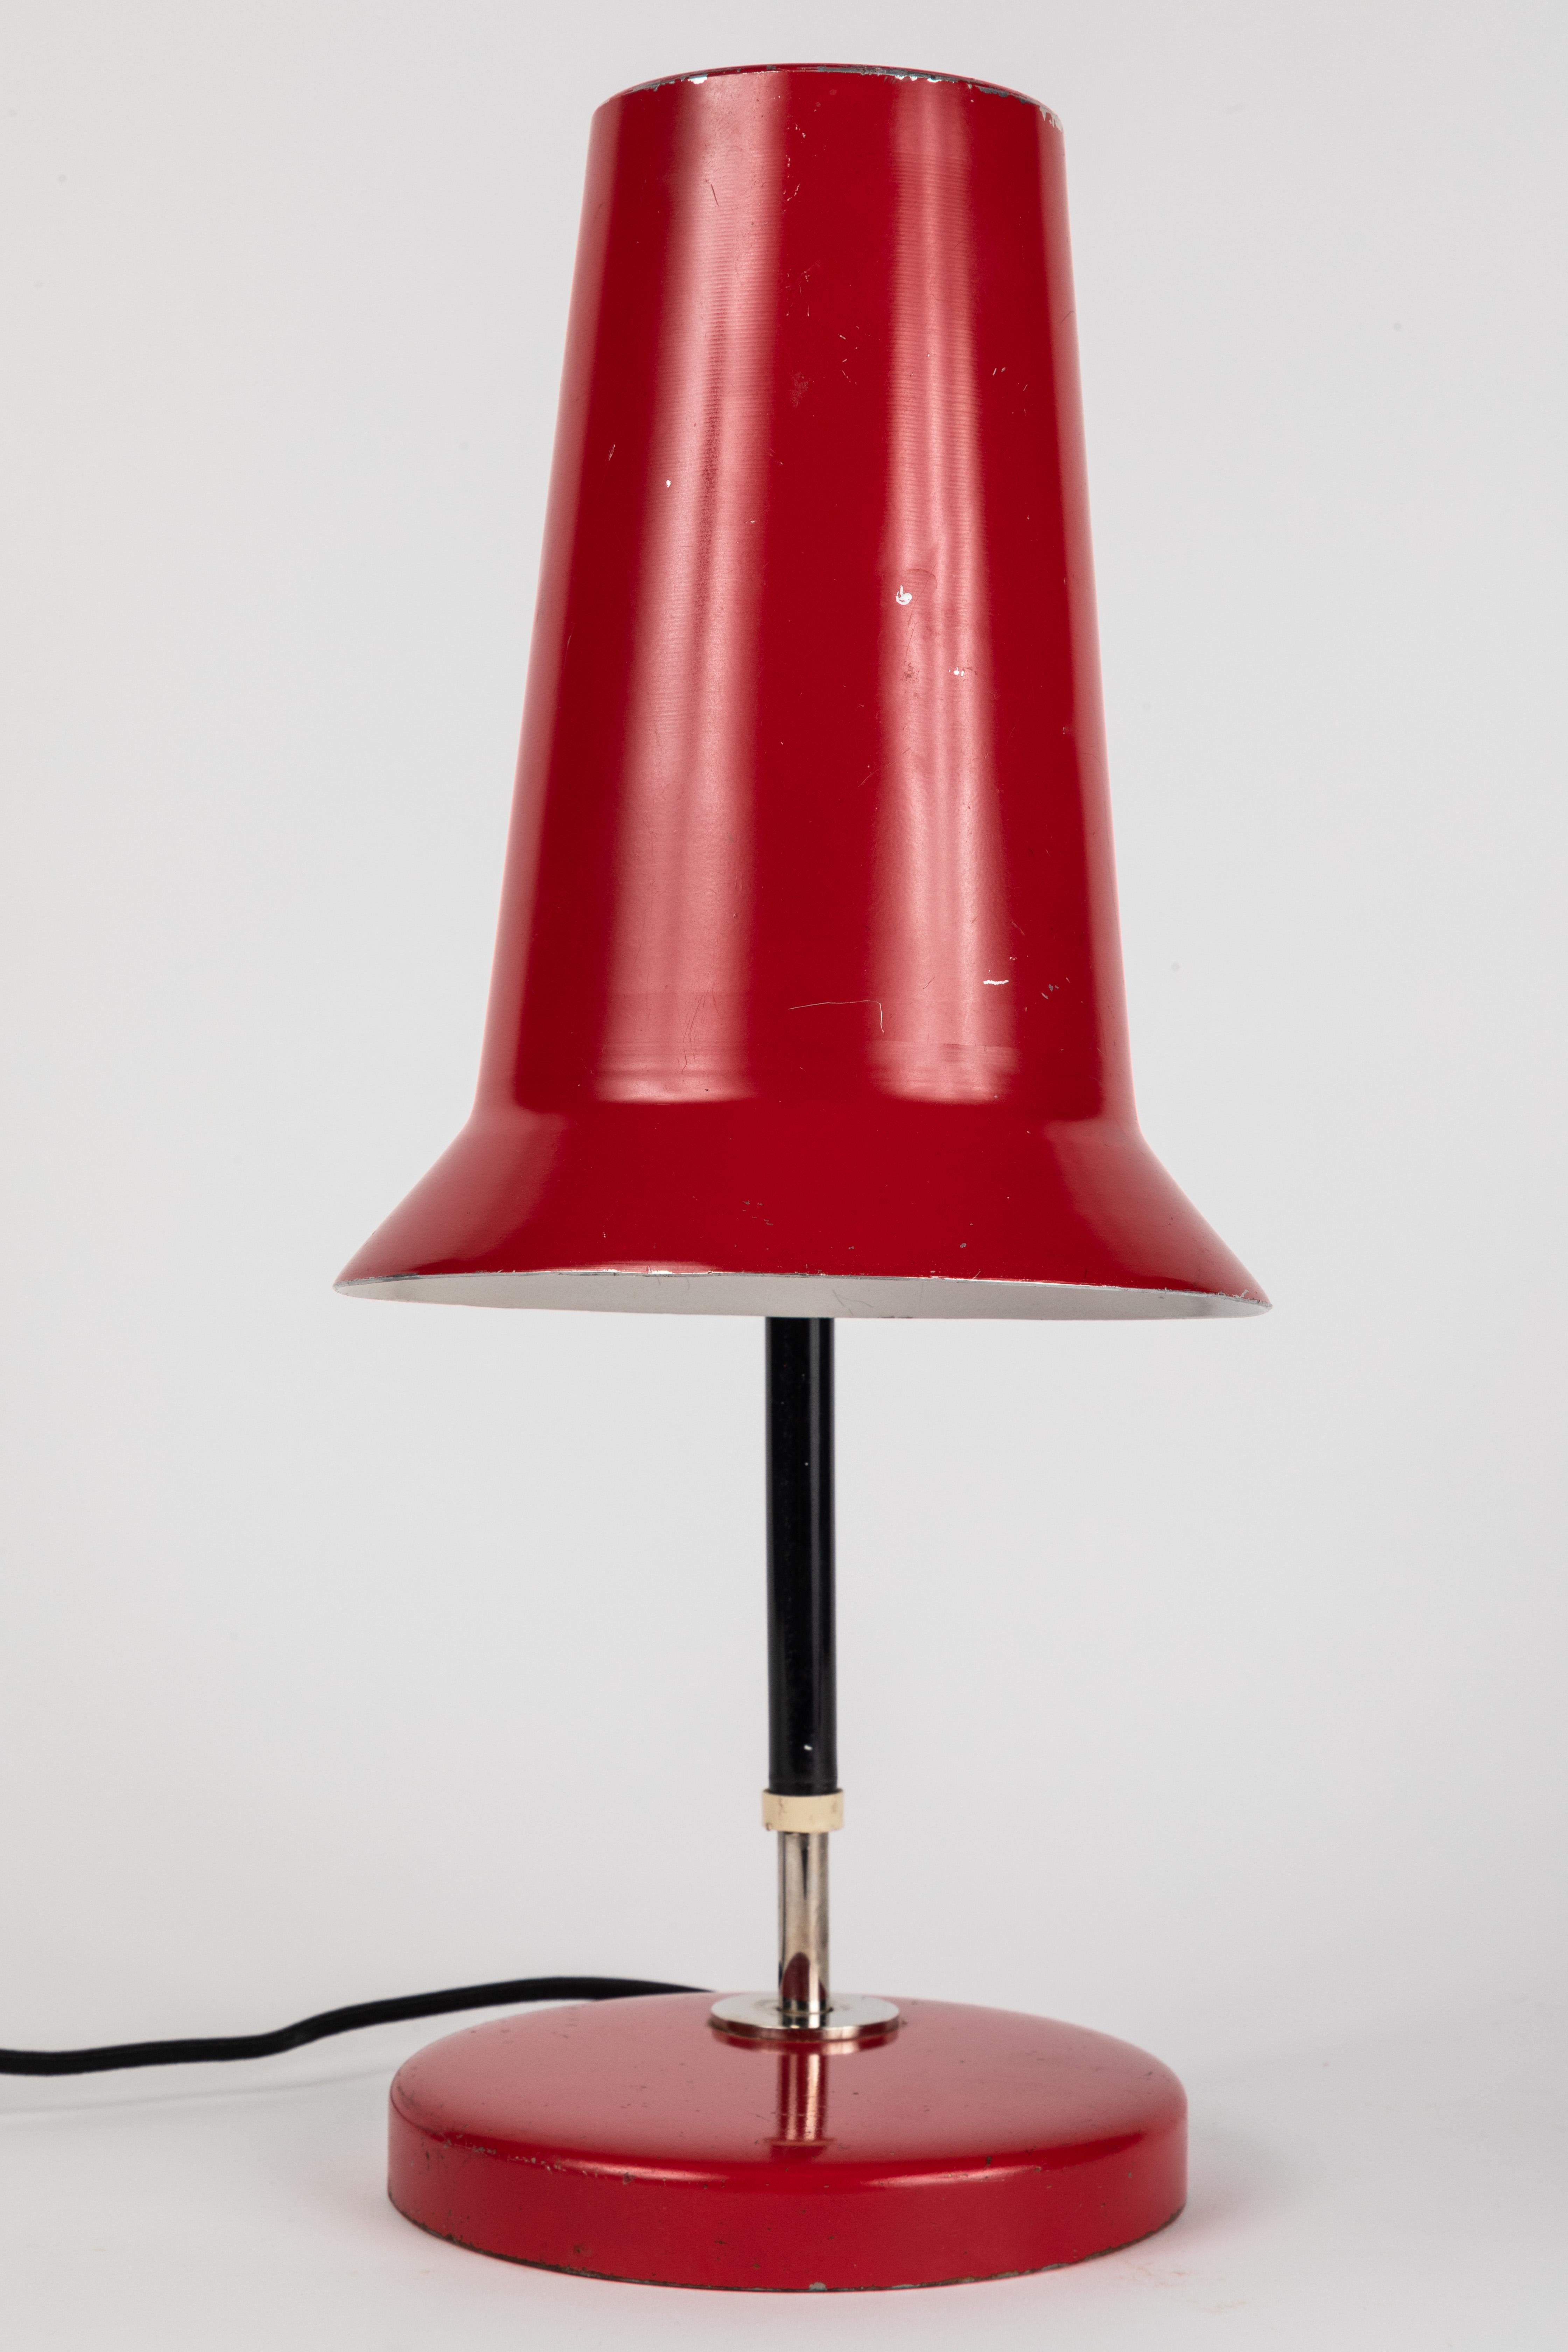 Scandinavian Modern 1960s Yki Nummi Series 40-040 Red Table Lamp for Stockman Orno